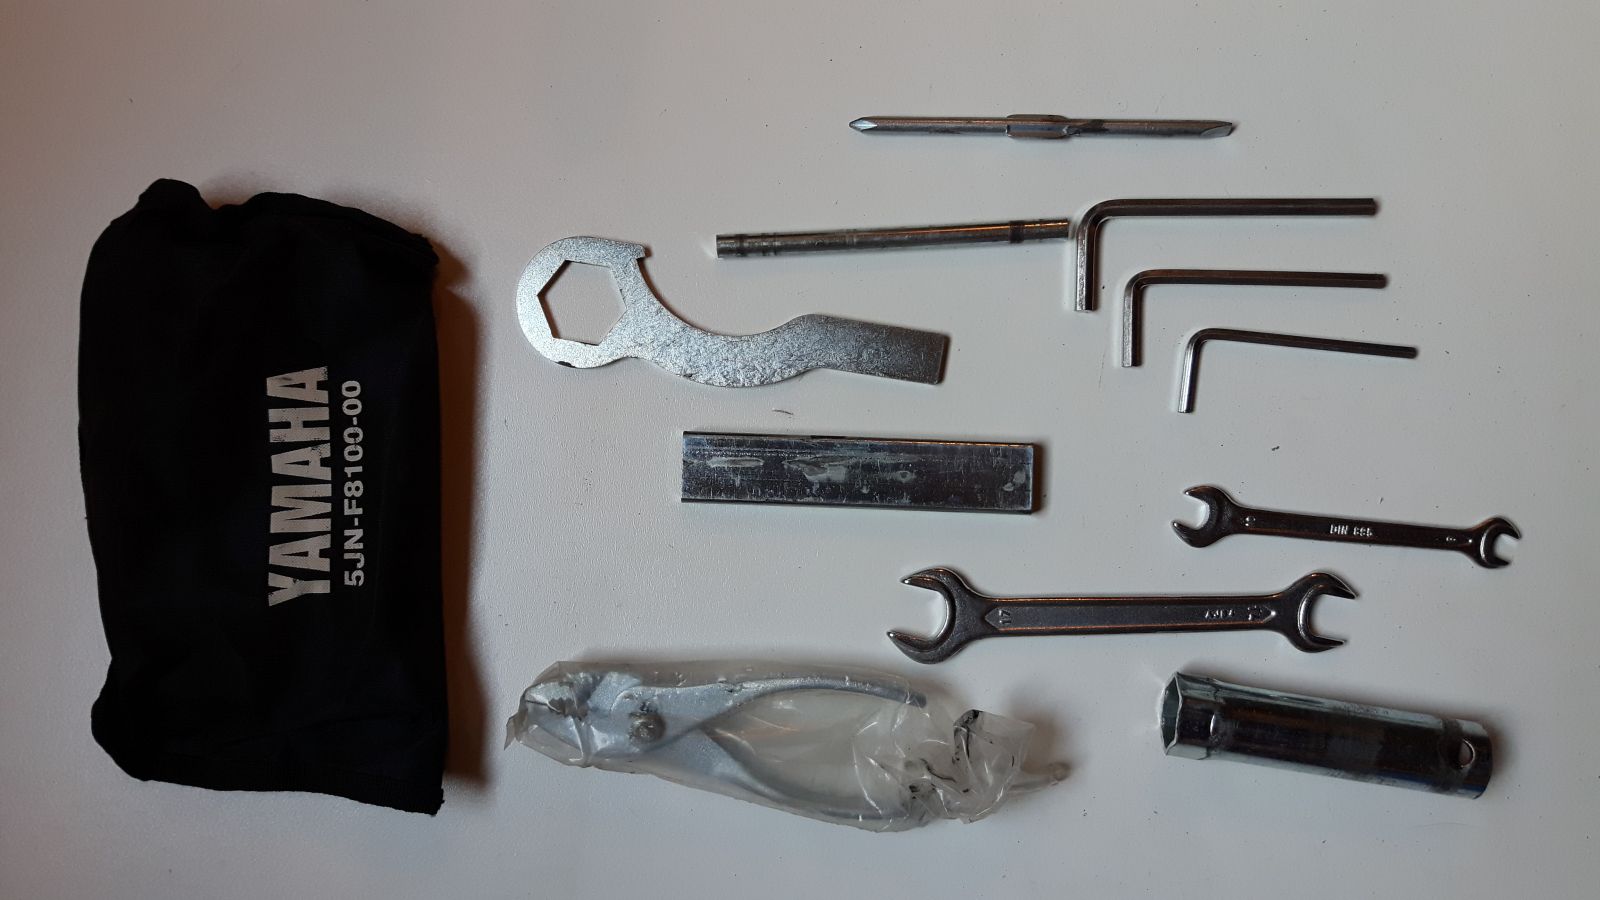 Yamaha tool kit